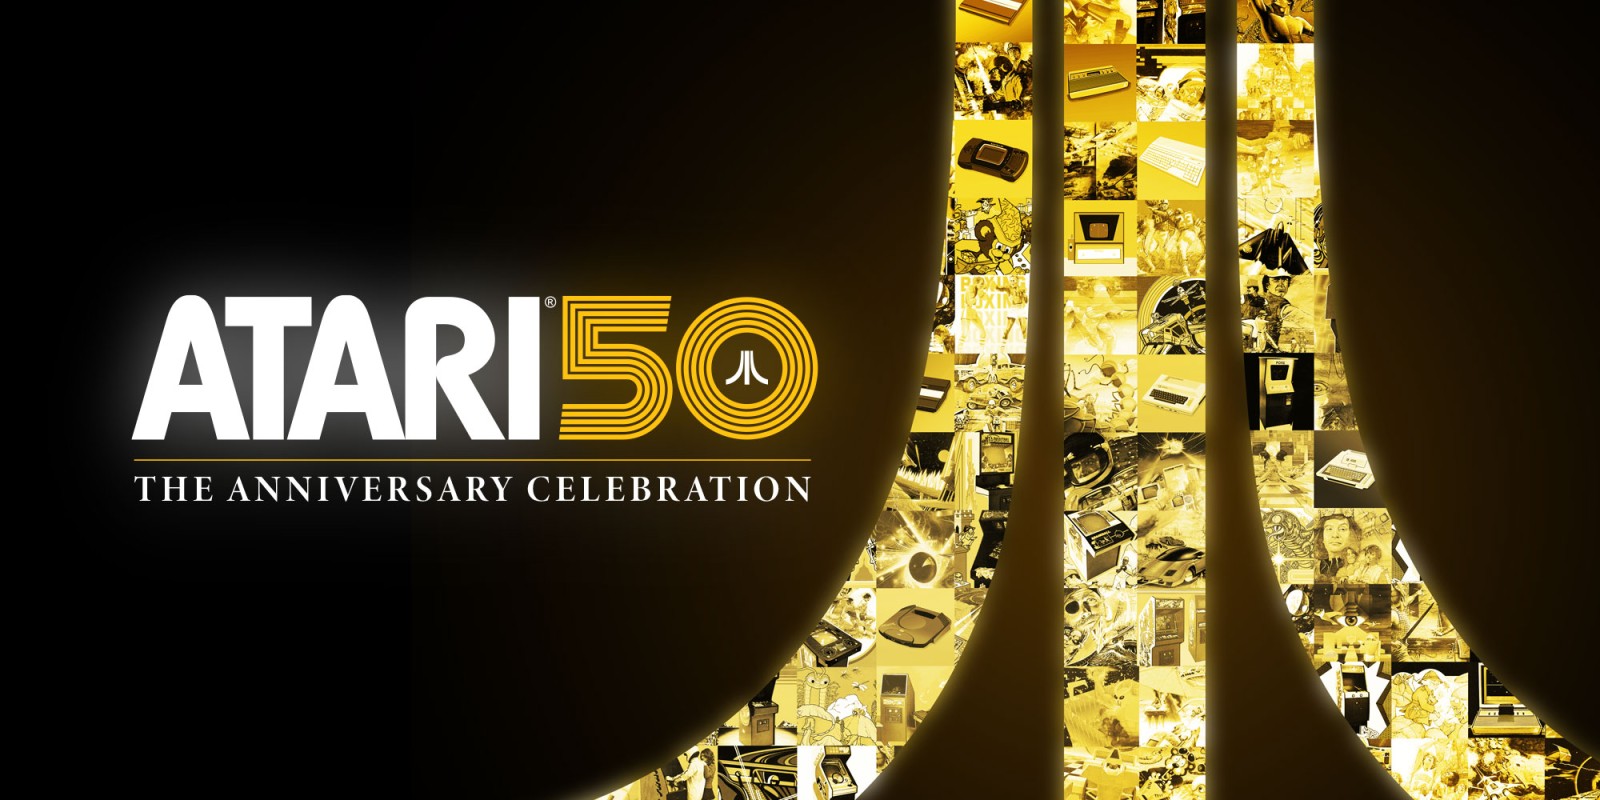 Atari, Celebrates 50 Years of History with the Release of Atari 50: The Anniversary Celebration